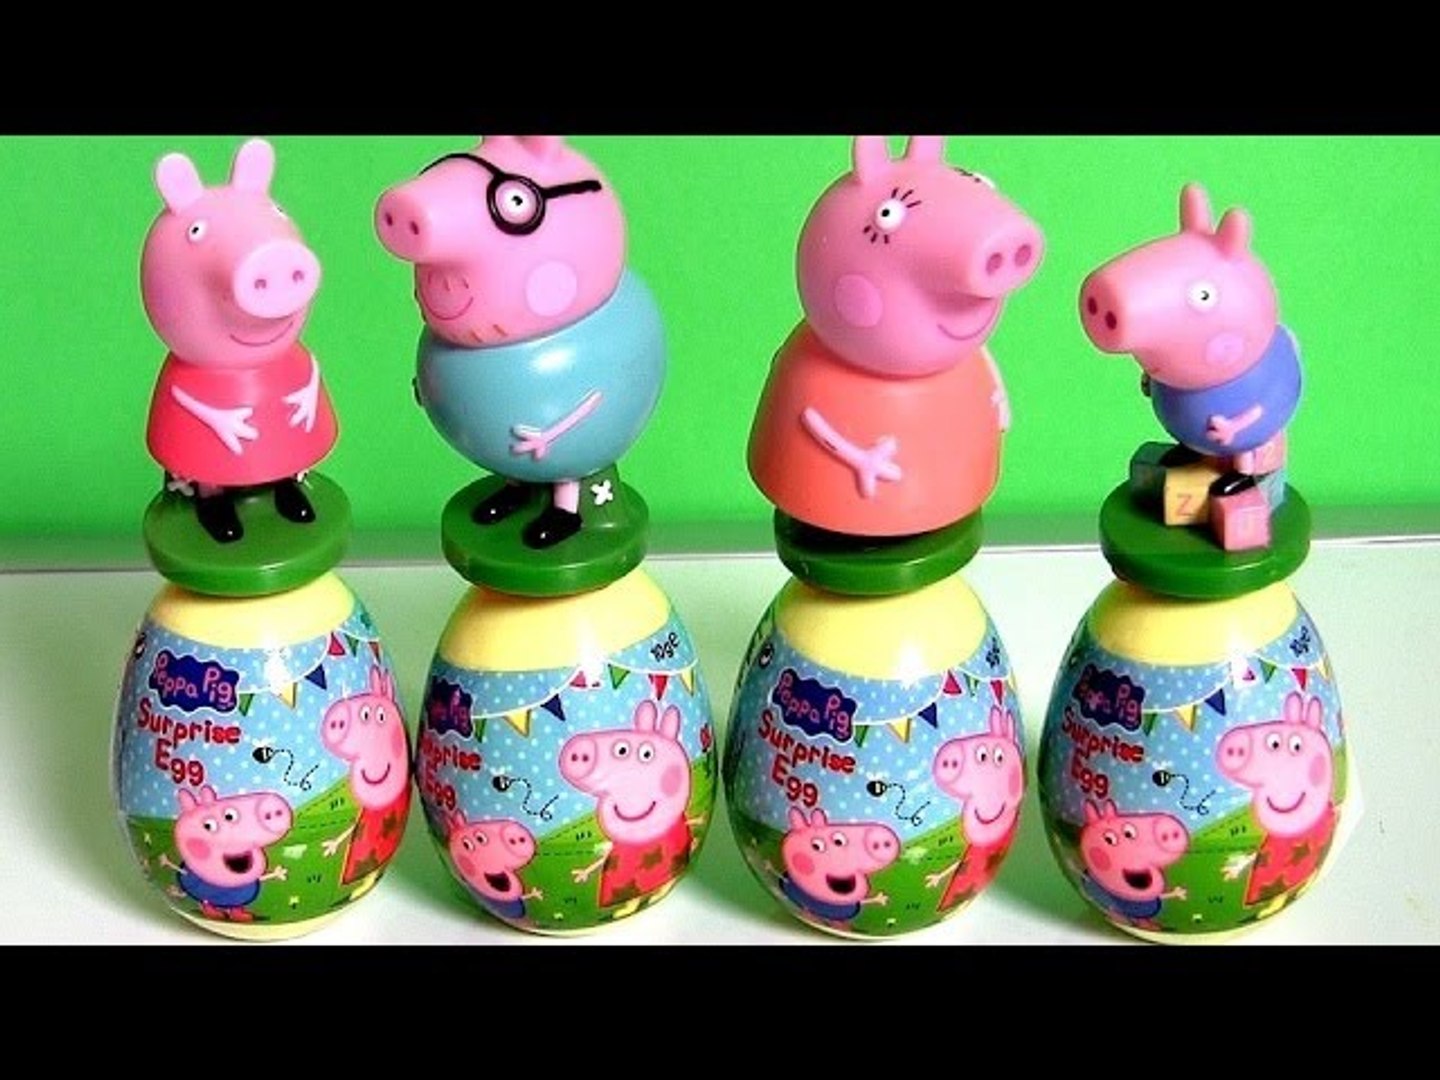 Peppa Pig Play Doh Surprise eggs Playdough Toys English episodes